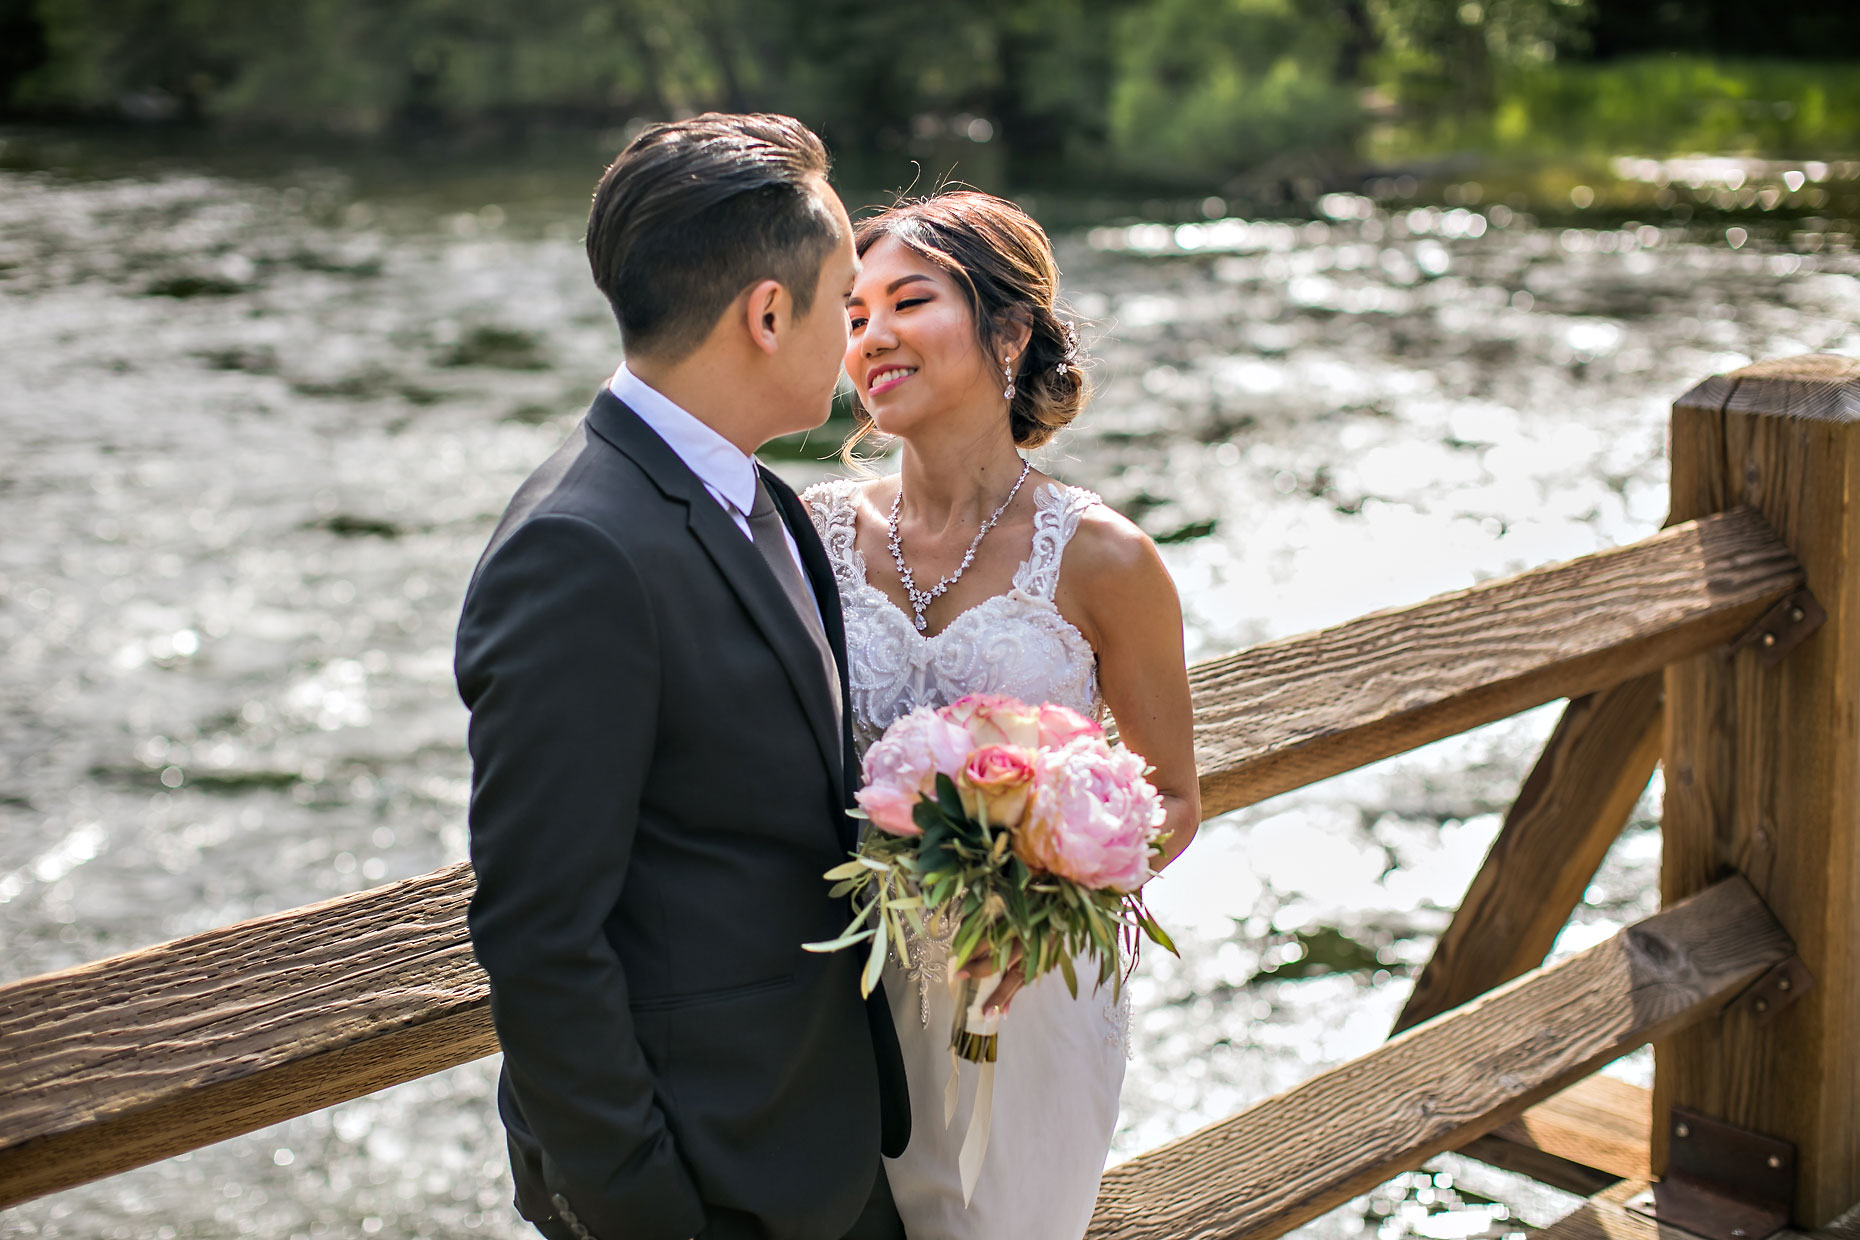 Yosemite bridge wedding & elopement photographer.